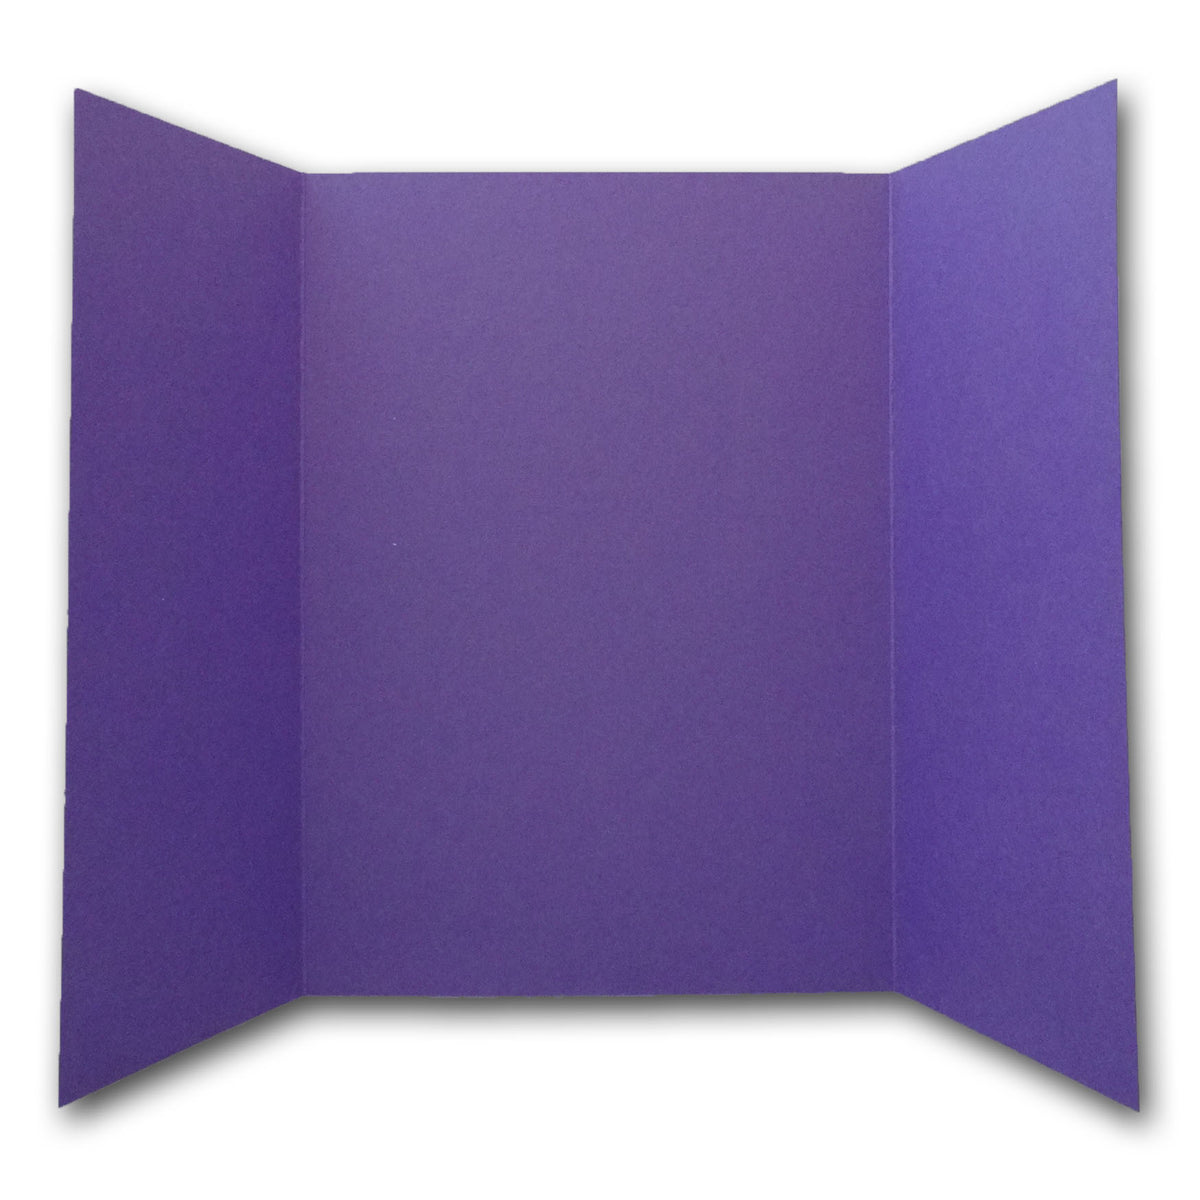 Purple 5x7 Gate Fold Discount Card Stock for DIY Invitations